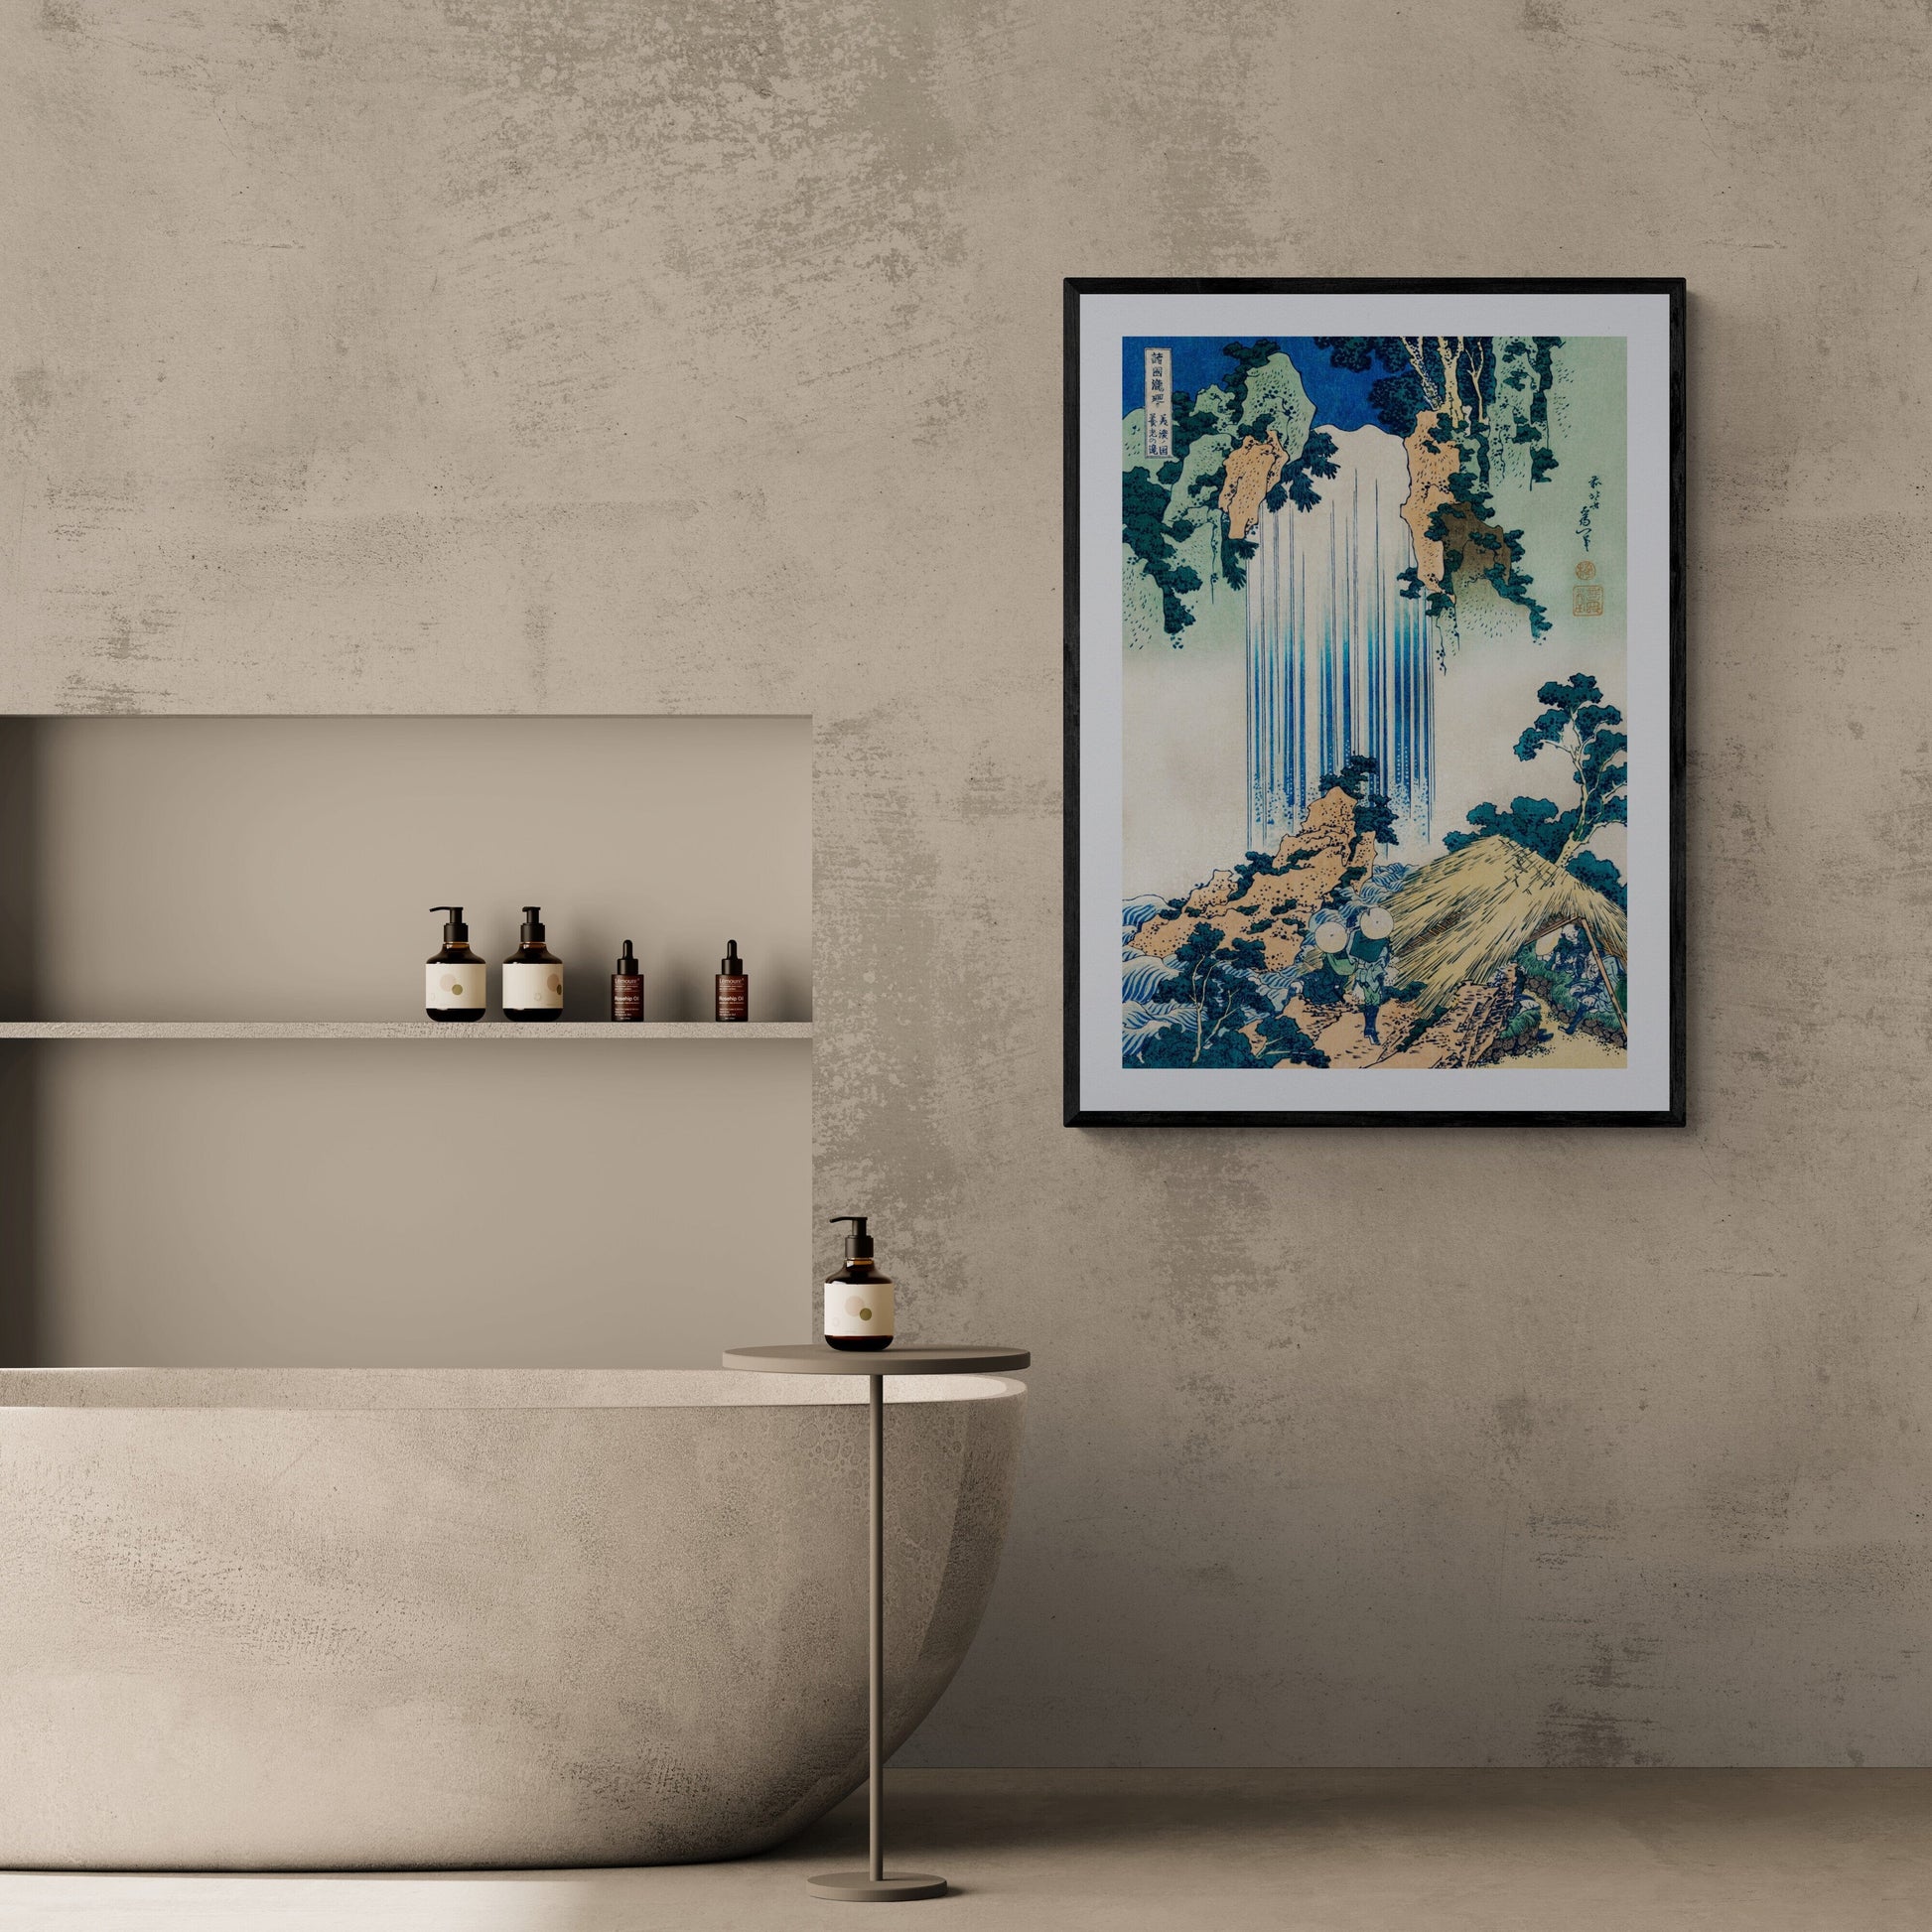 Yoro Waterfall artwork (1800s) | Katsushika Hokusai Posters, Prints, & Visual Artwork The Trumpet Shop   